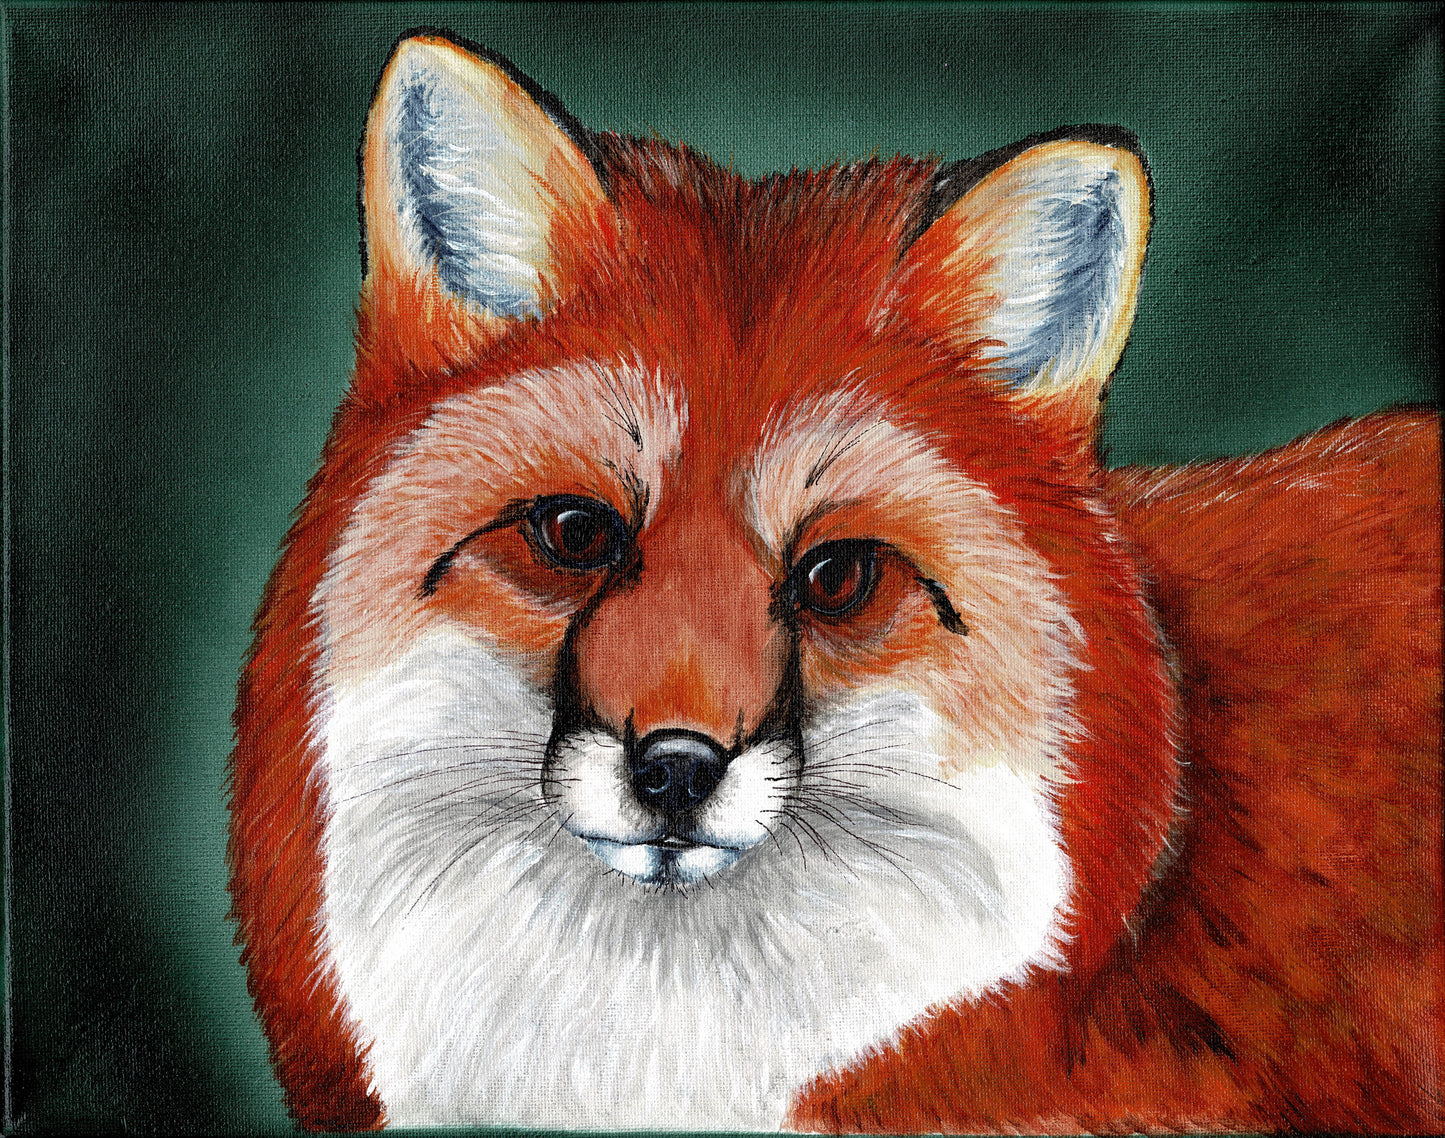 "In the Fox's Eye" acrylic painting